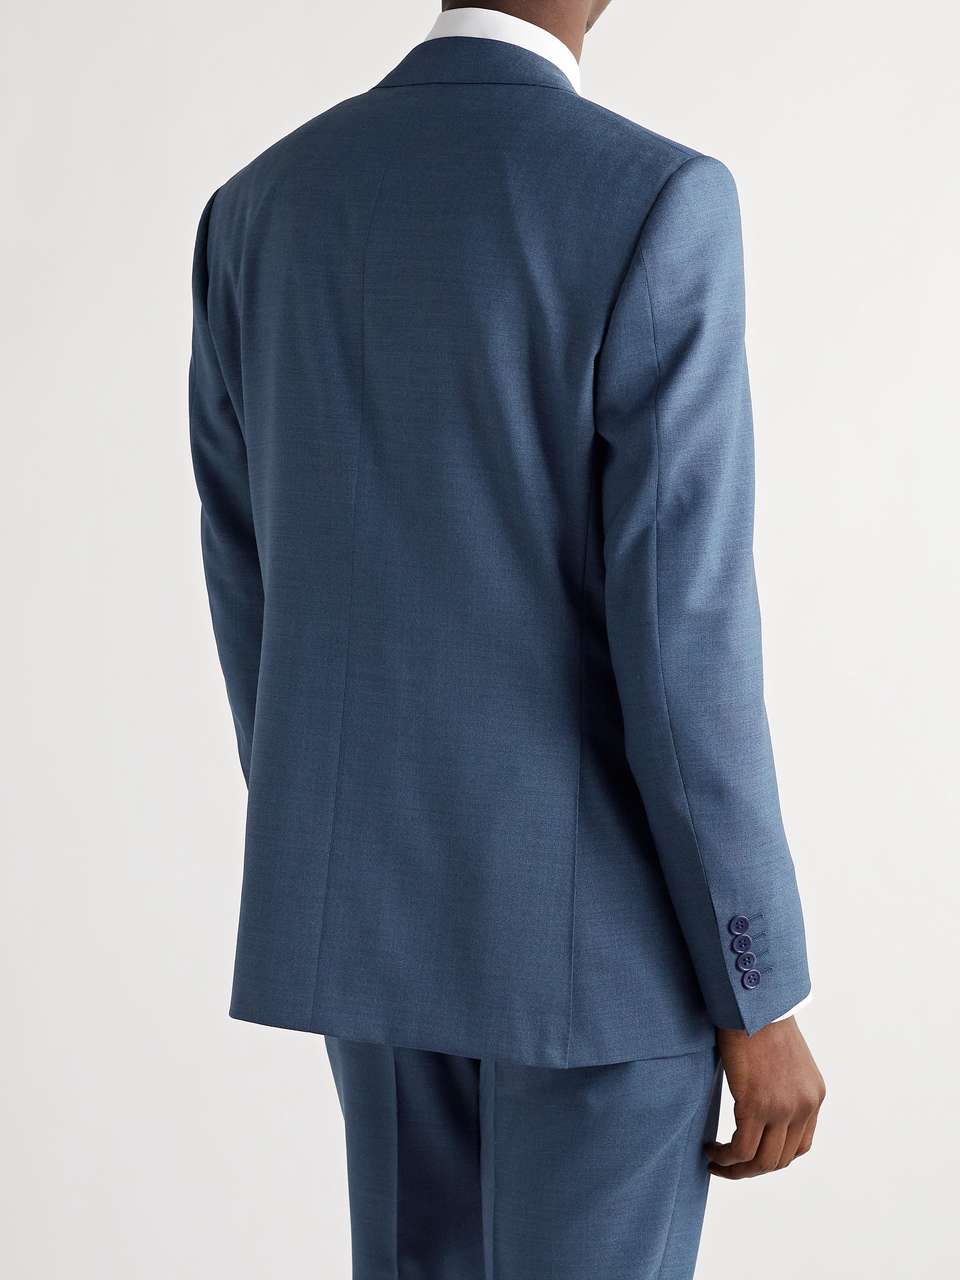 CANALI Wool Suit Jacket for Men | MR PORTER